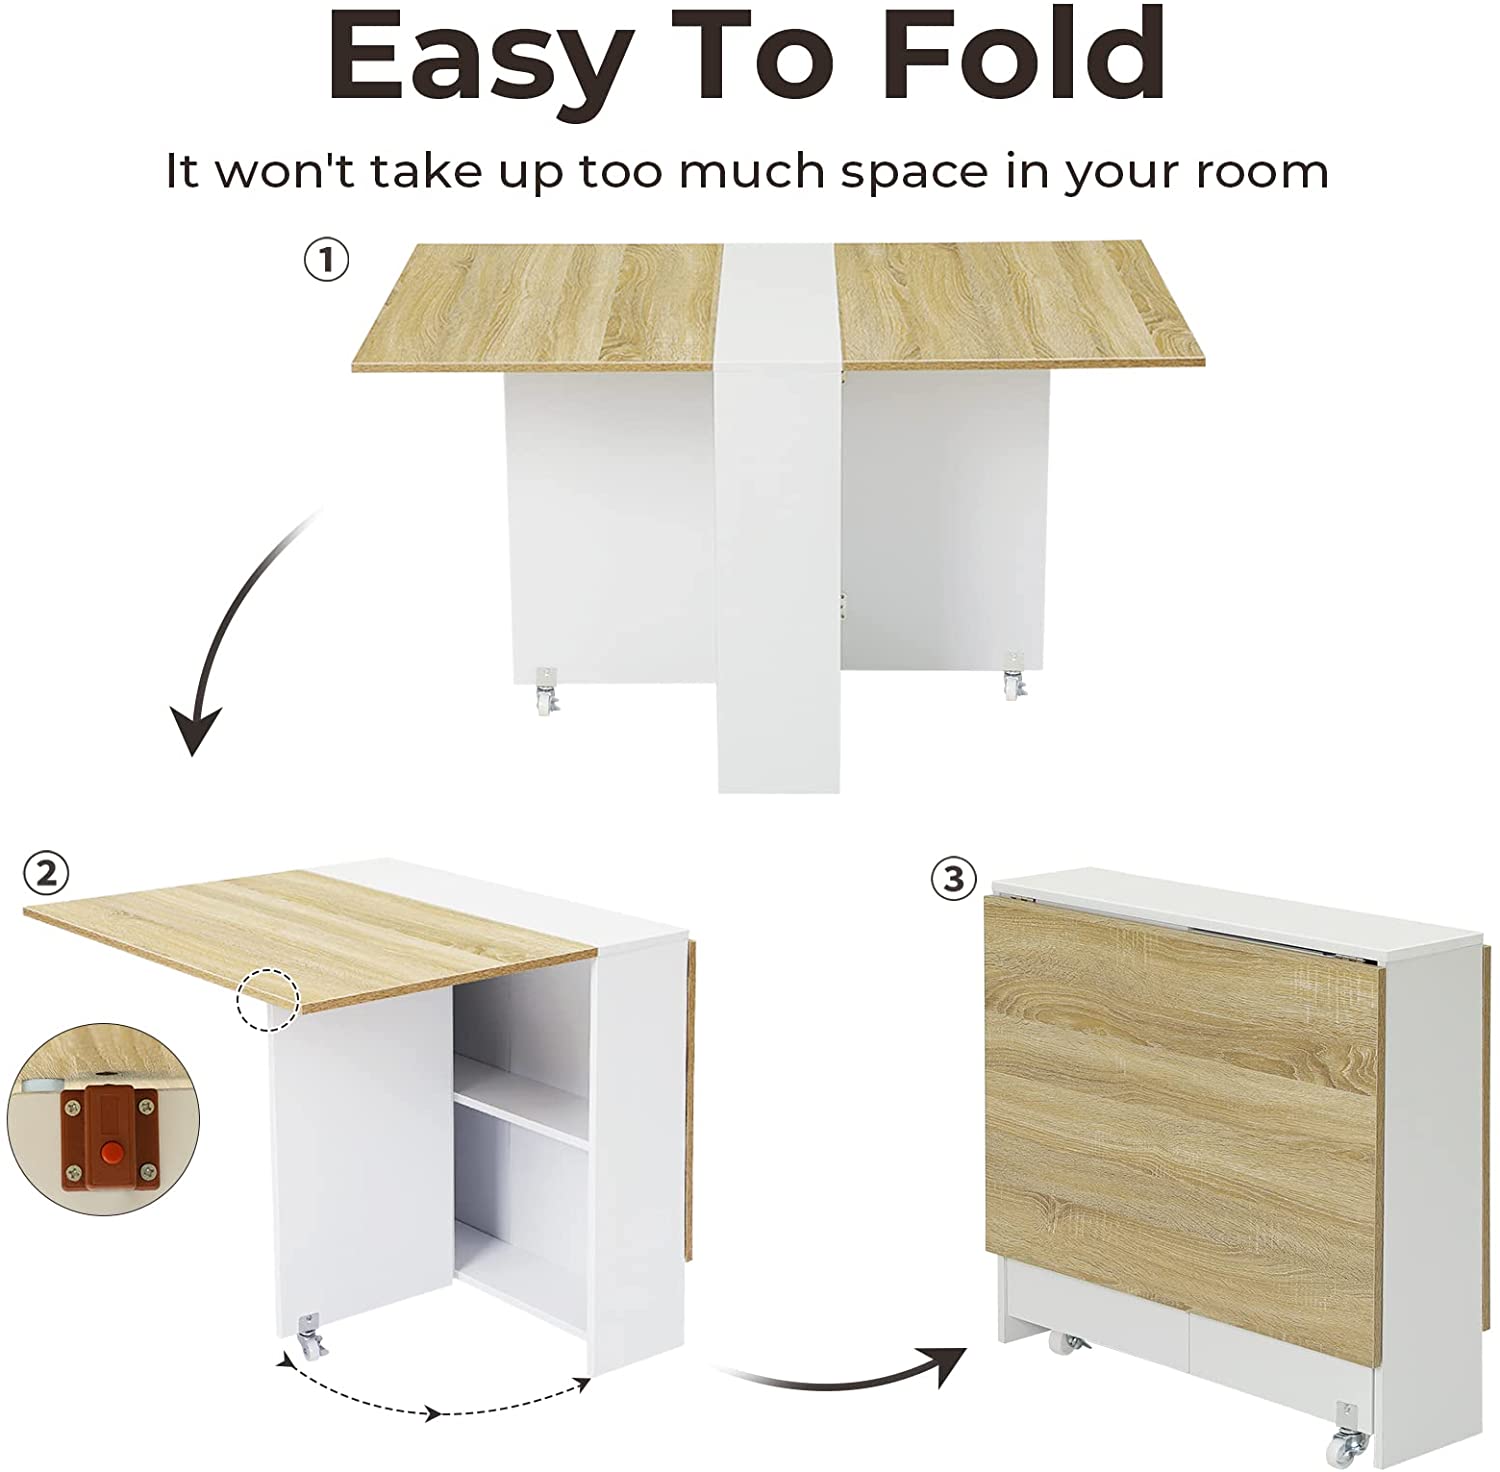 Airbnb Folding Furniture